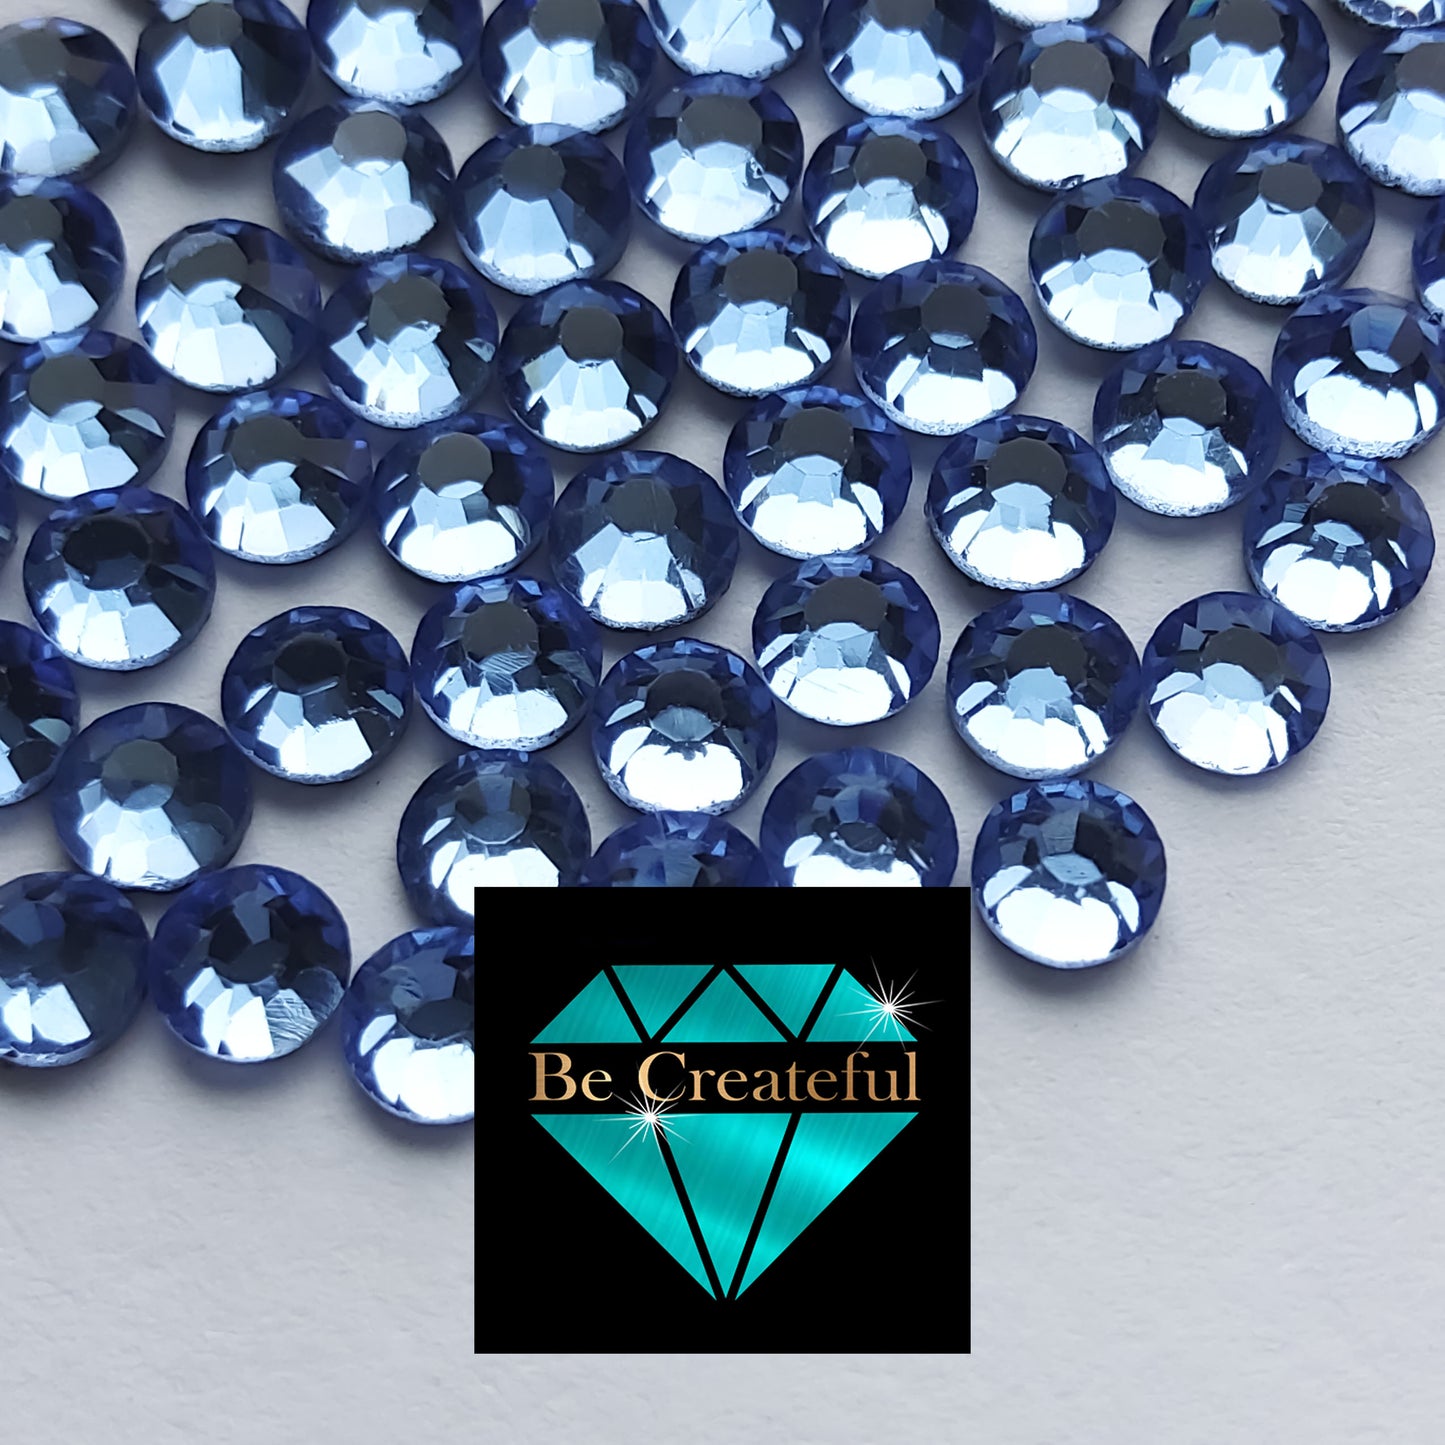 DMC Lt. Sapphire Glass Hotfix Rhinestones - Be Createful, Beautiful Rhinestones at wholesale prices.